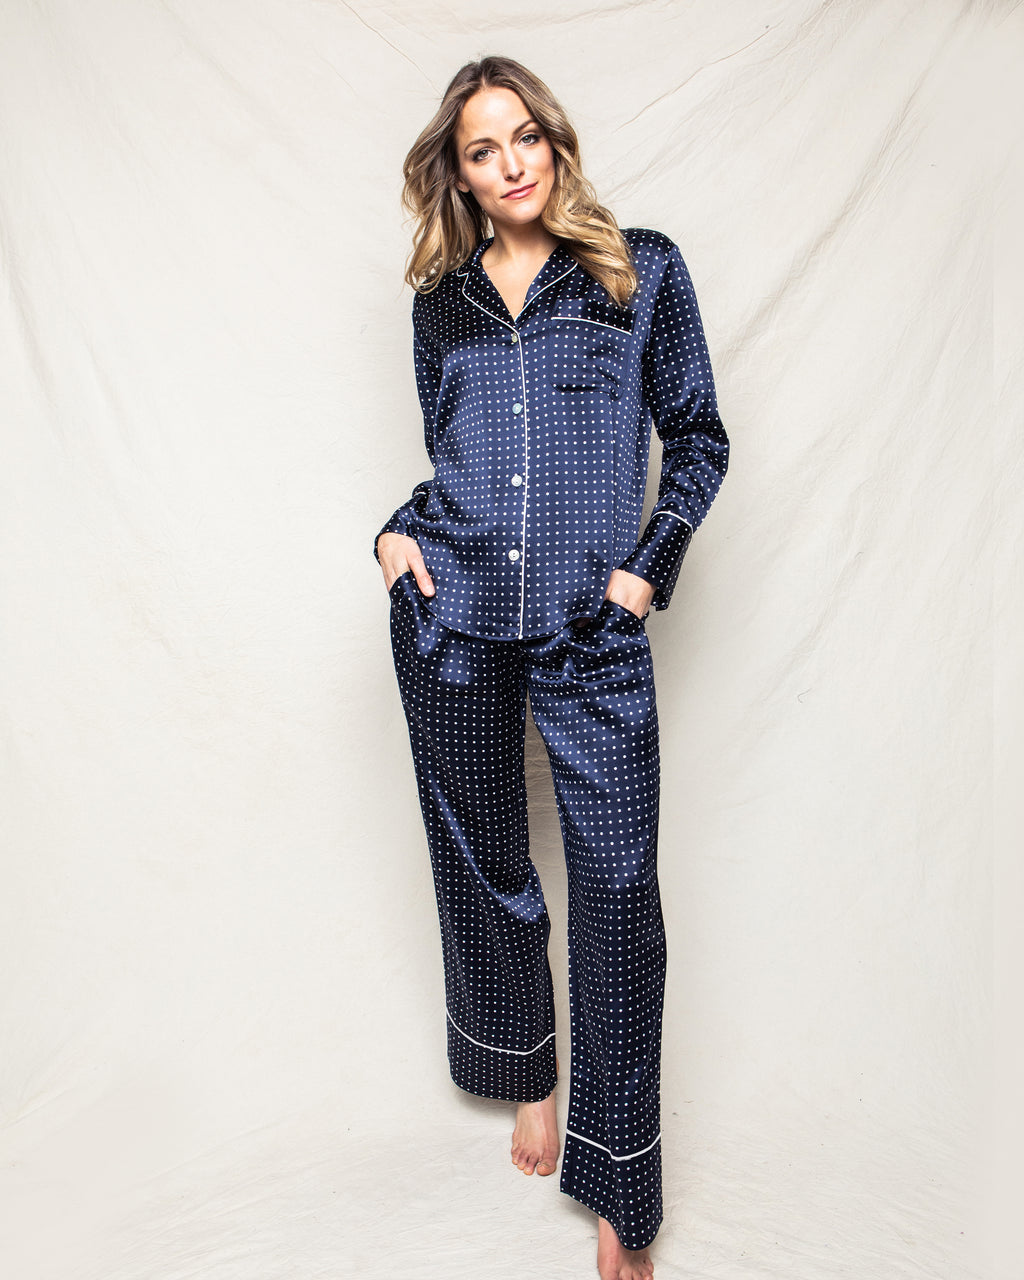 Women's Silk Pajama Set in Bordeaux Polka Dot